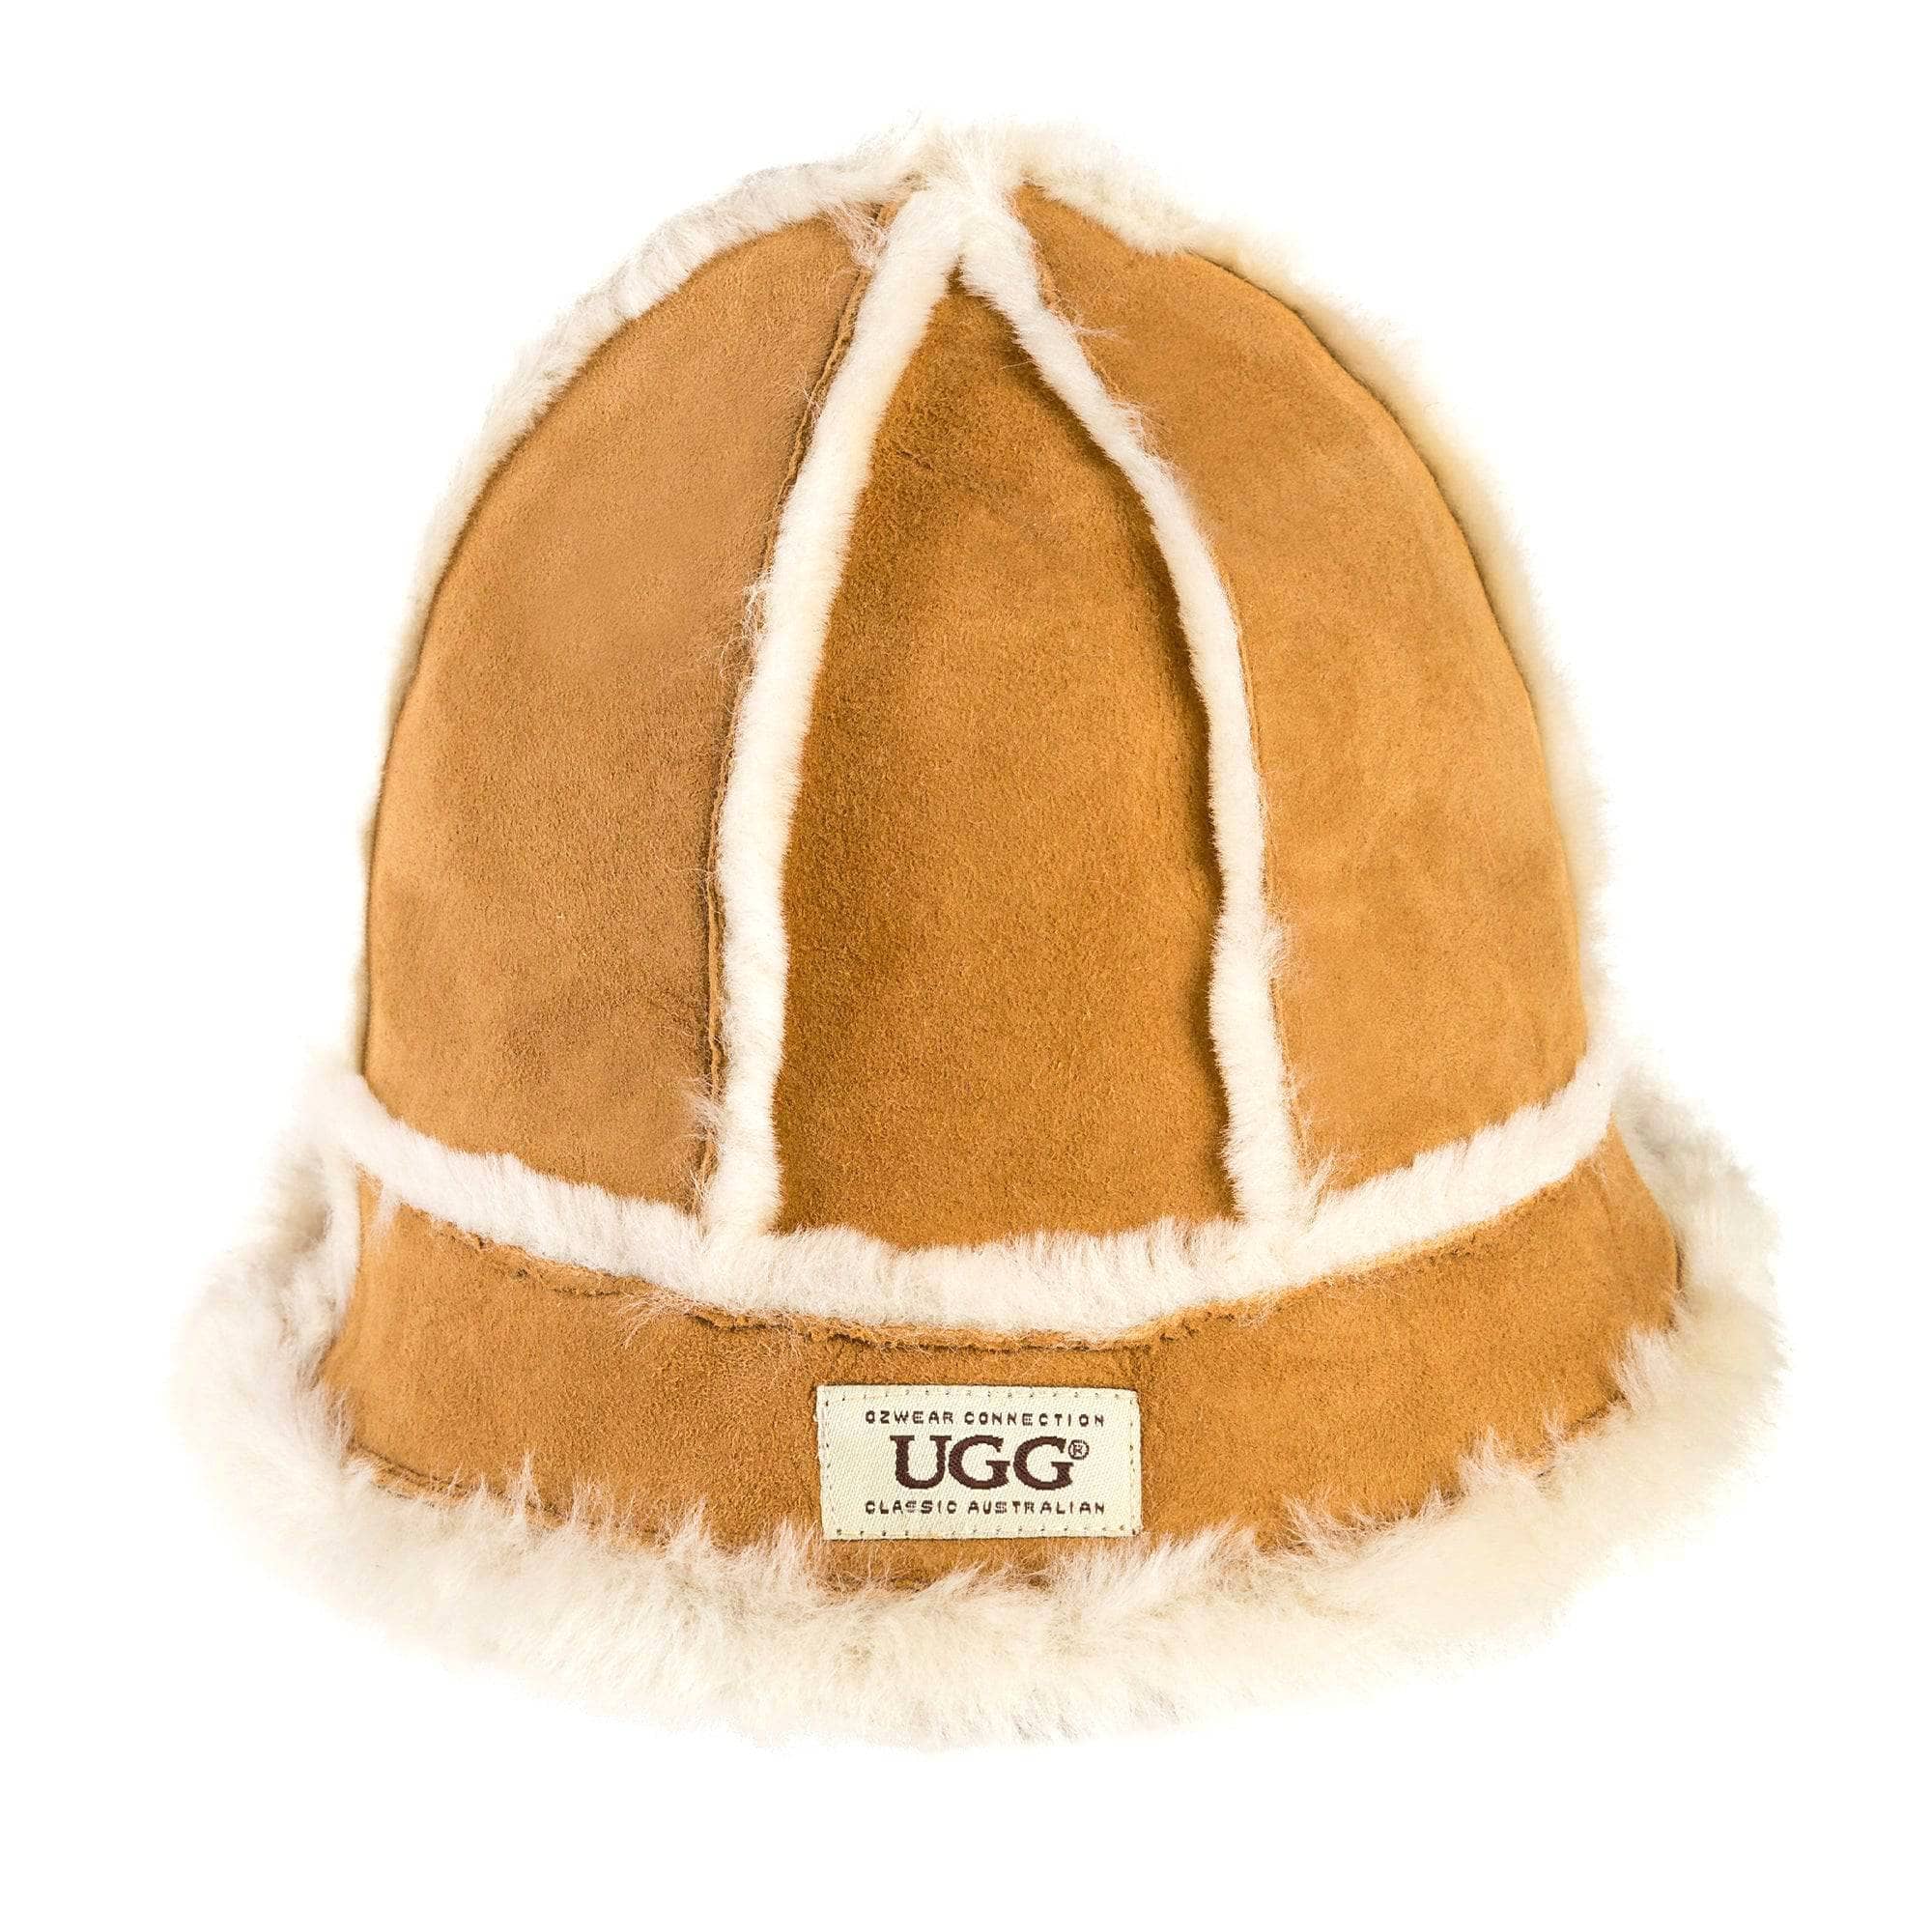  - UGG Buckle Hat - Original UGG Australia Classic